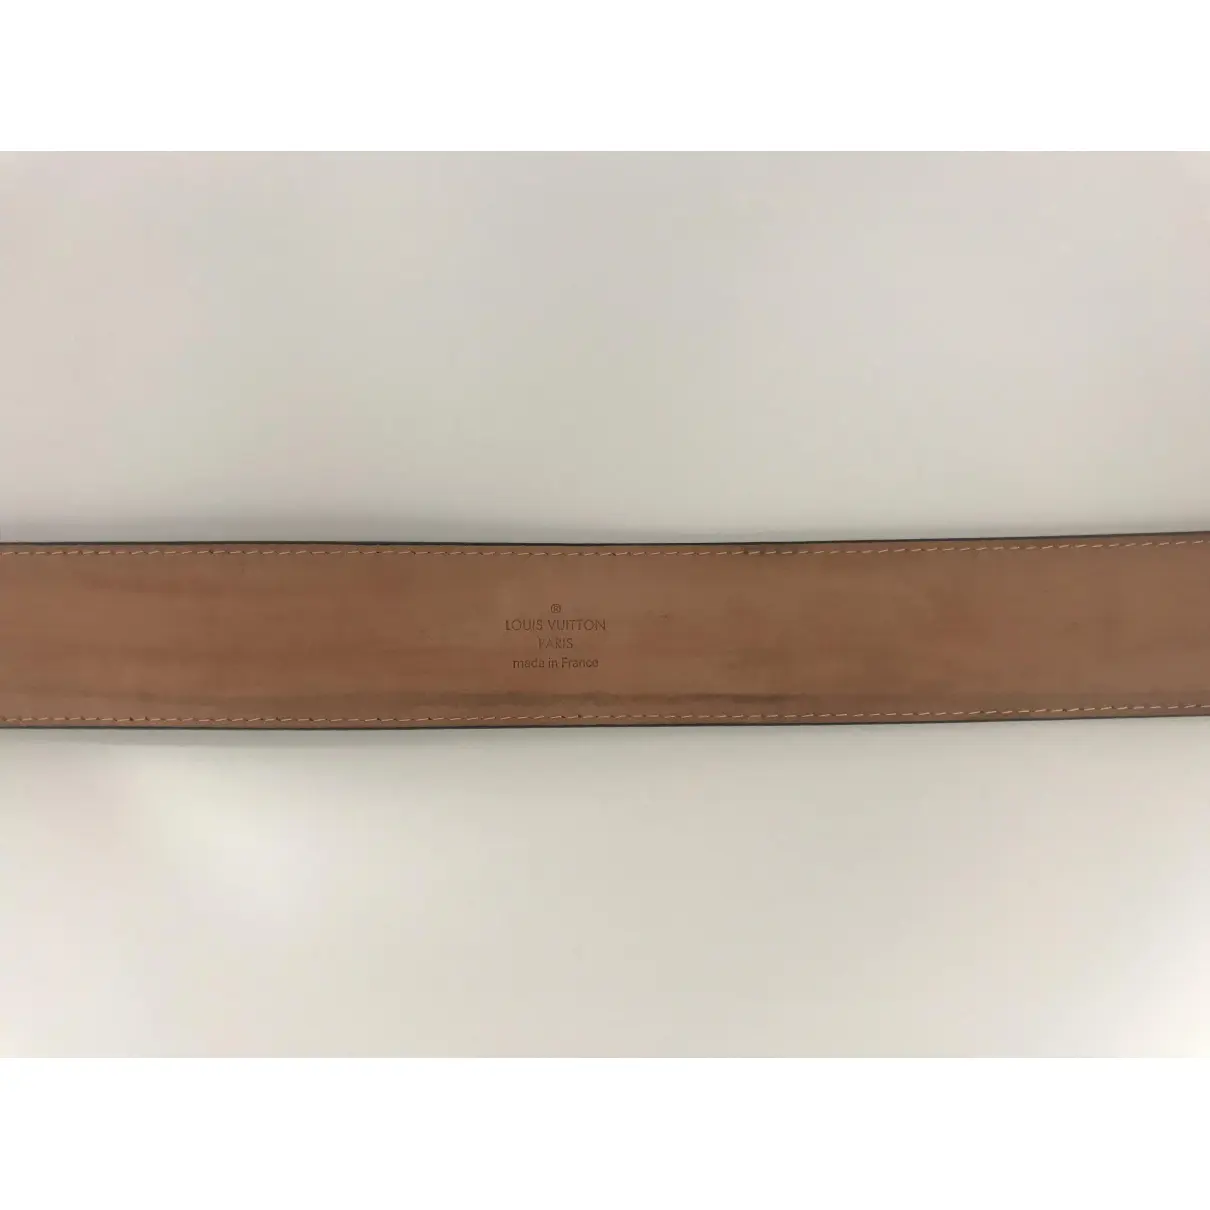 Buy Louis Vuitton Initiales patent leather belt online